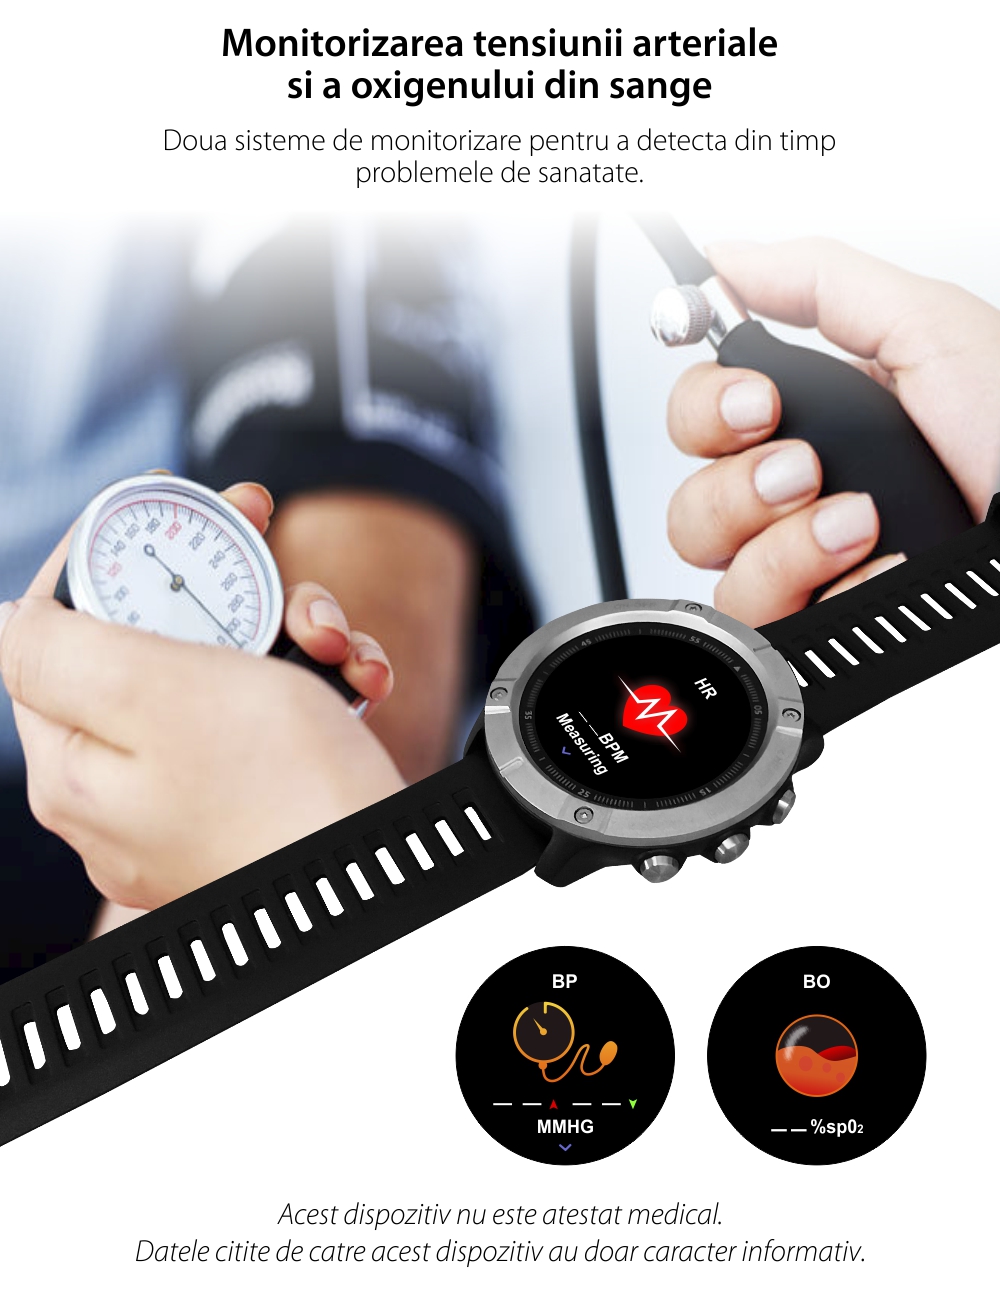 Ceas Smartwatch TKY-MC01, Negru, Pedometru, Calorii, Moduri sportive, Monitorizare somn, oxigen, ritm cardiac, Notificari